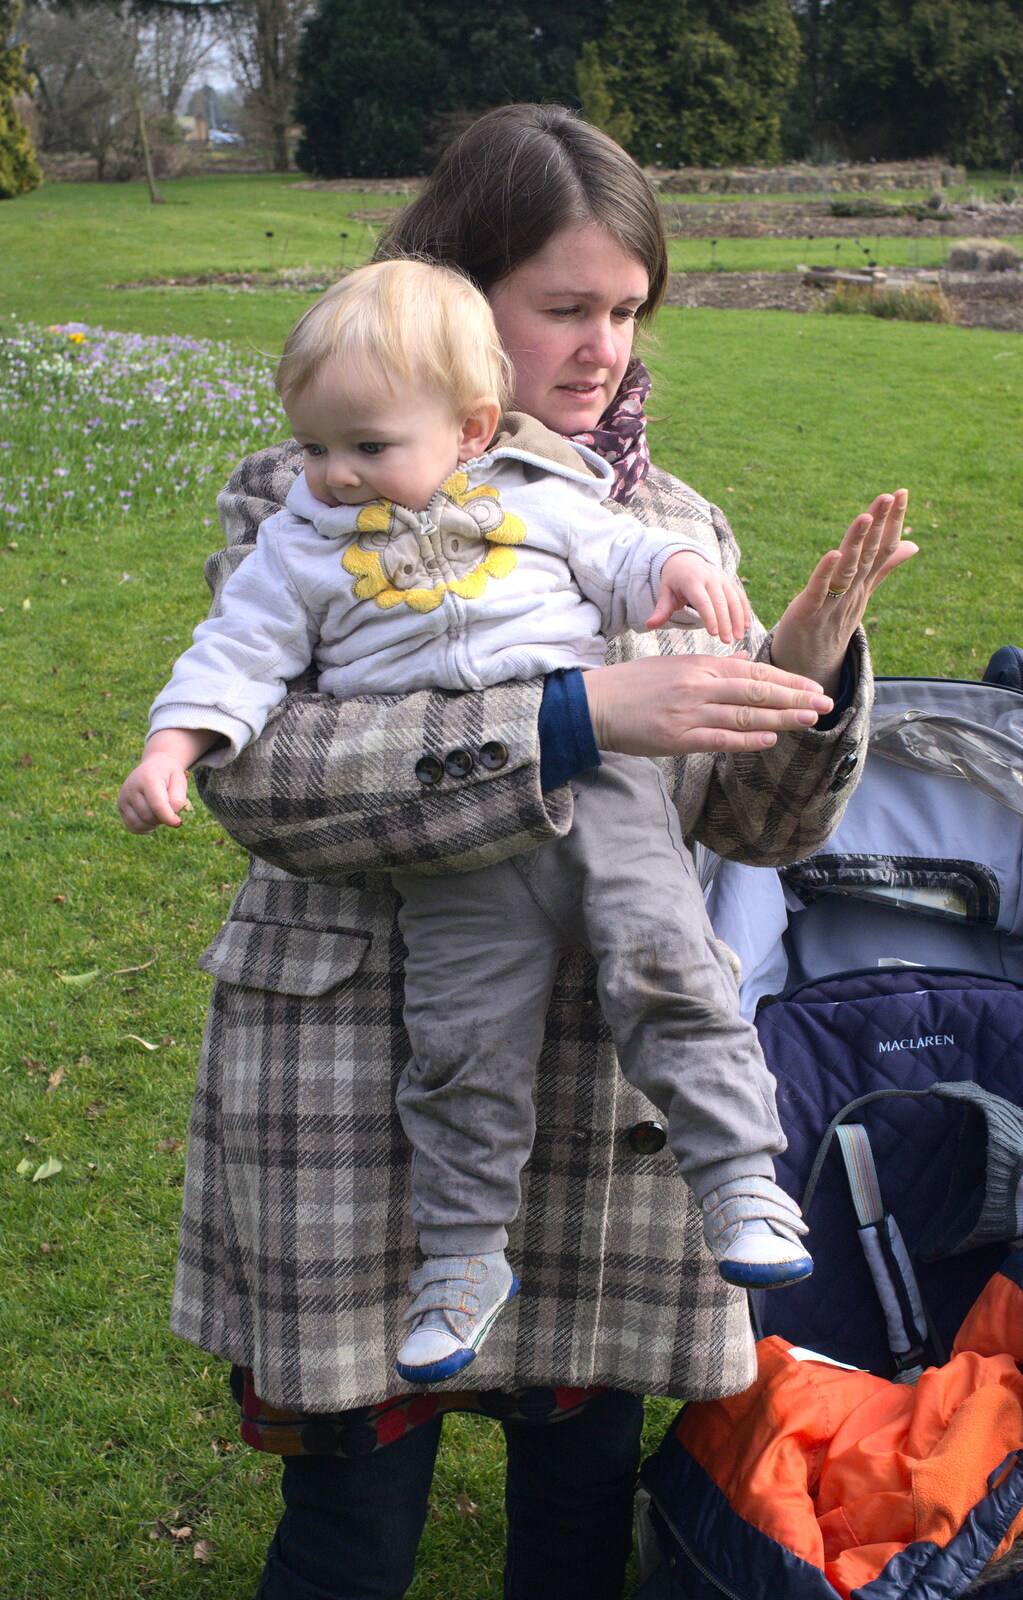 Harry gets scooped up from A Walk around Bressingham Winter Garden, Bressingham, Norfolk - 3rd March 2013